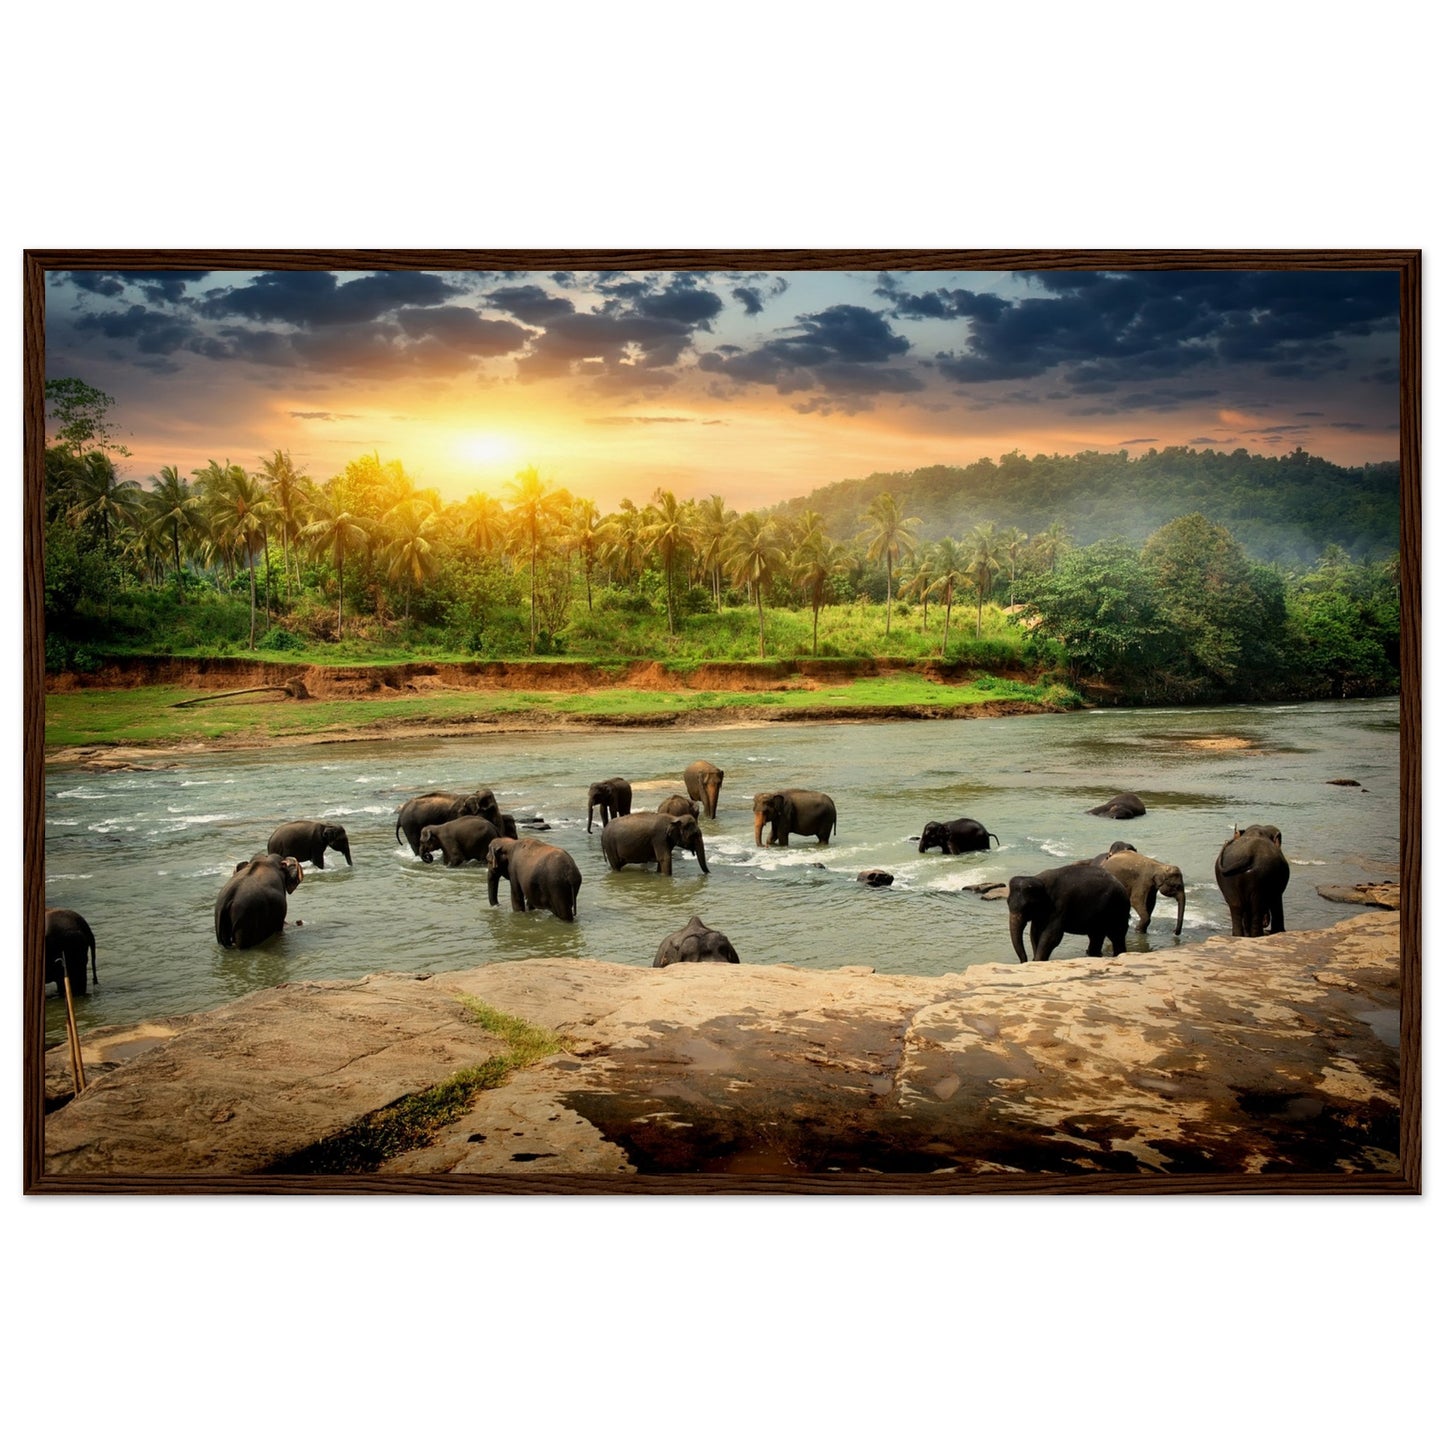 Elephants in Sri Lanka's Jungle